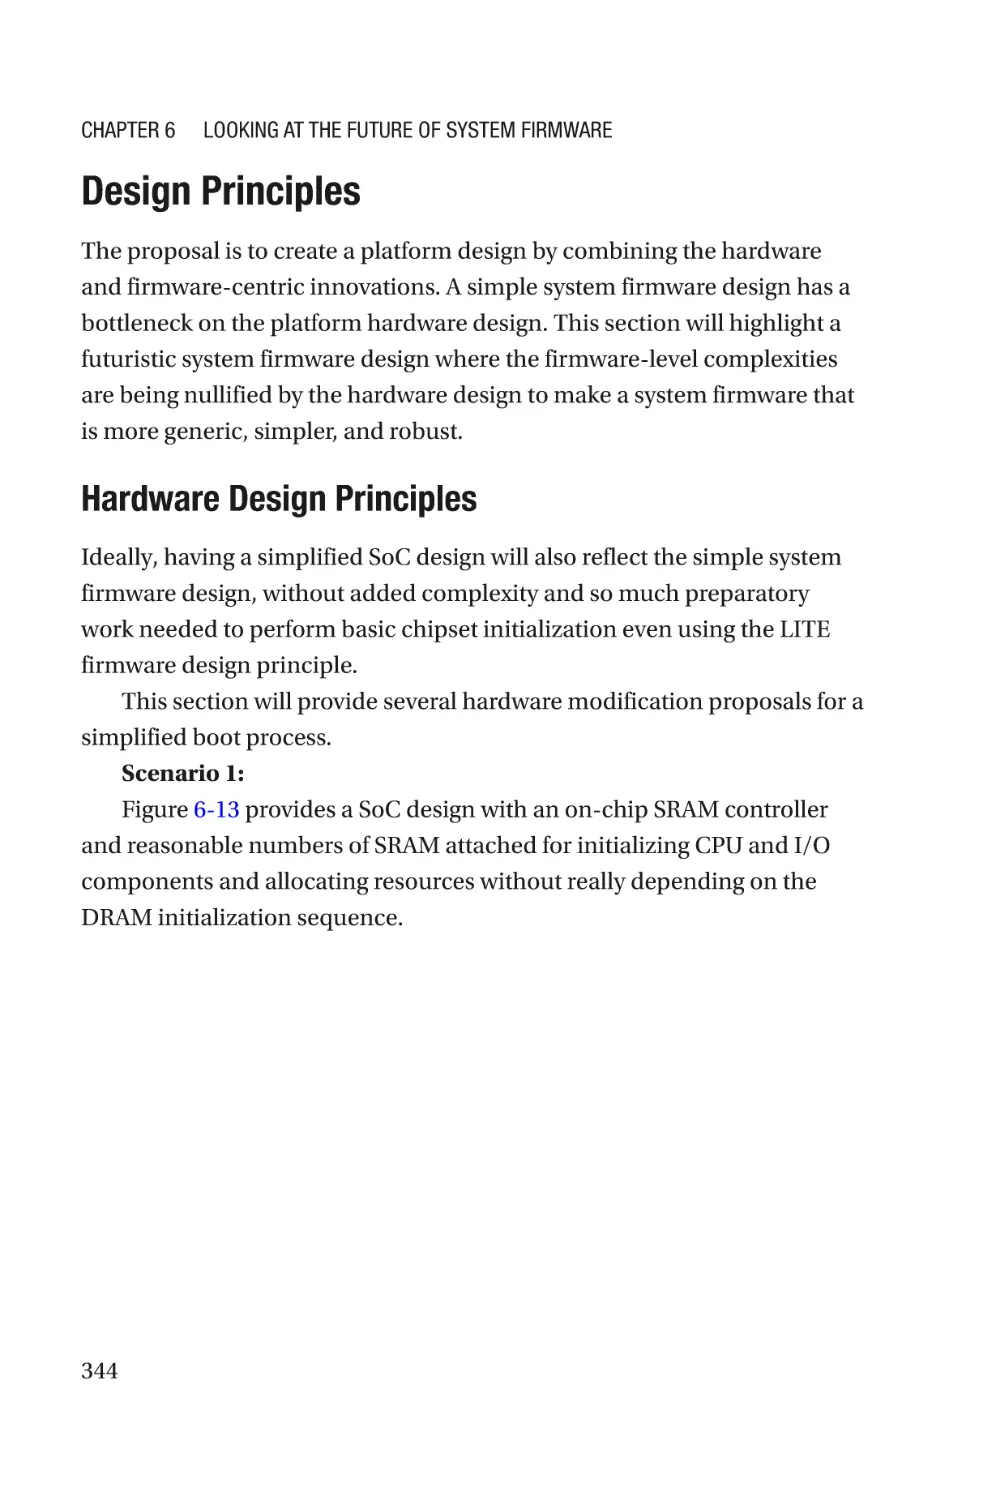 Design Principles
Hardware Design Principles